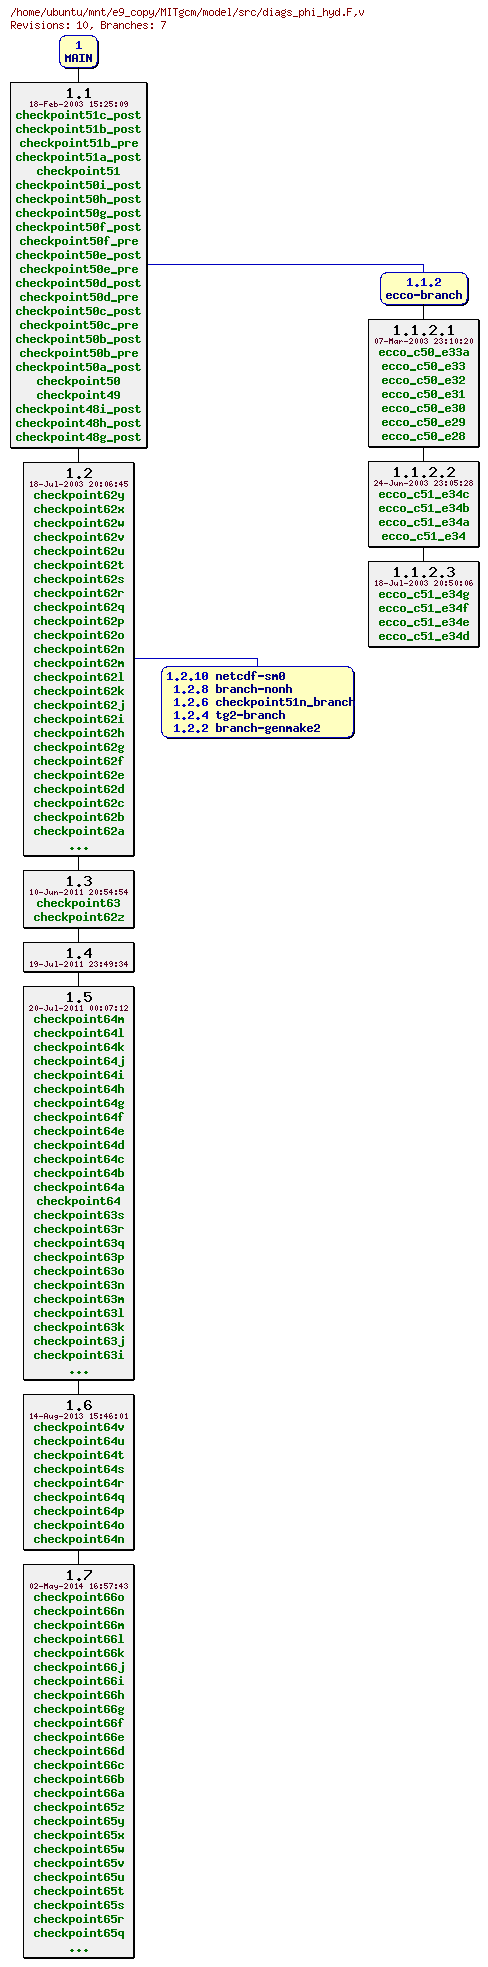 Revisions of MITgcm/model/src/diags_phi_hyd.F